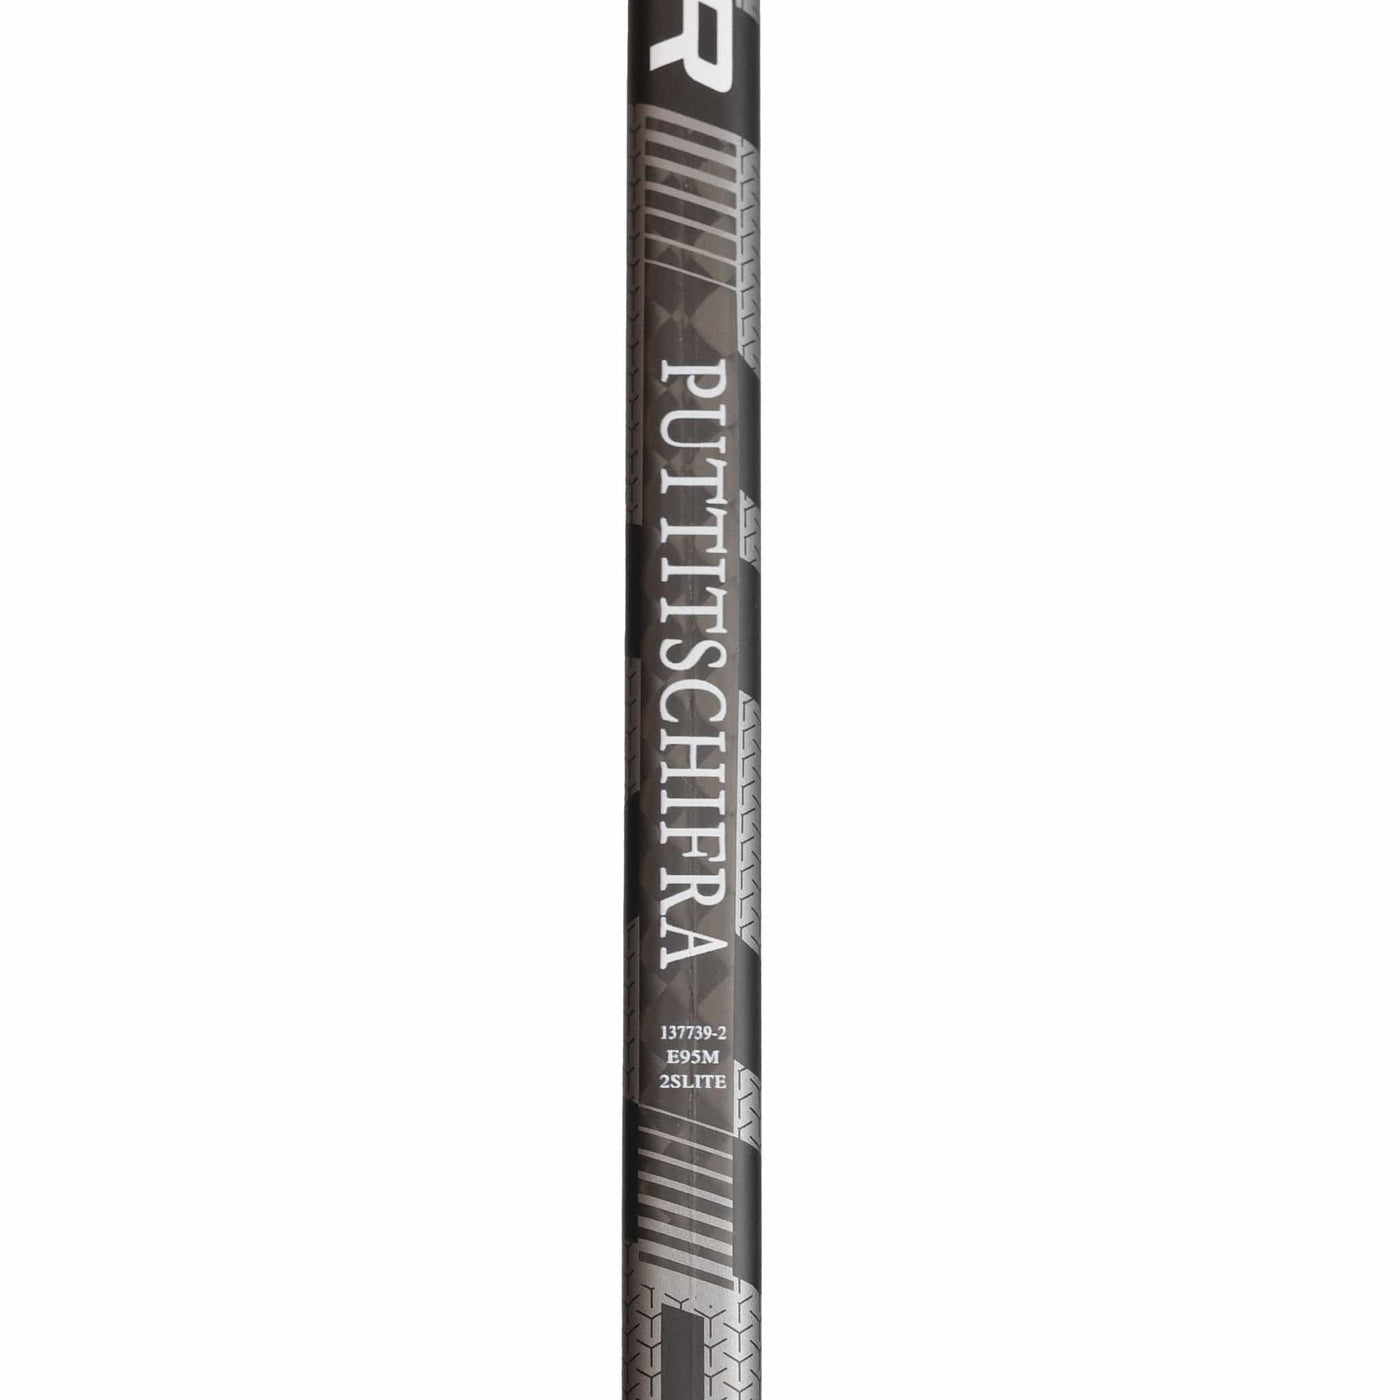 Bauer Supreme NHL Custom Senior Goalie Stick - Puttitschifra